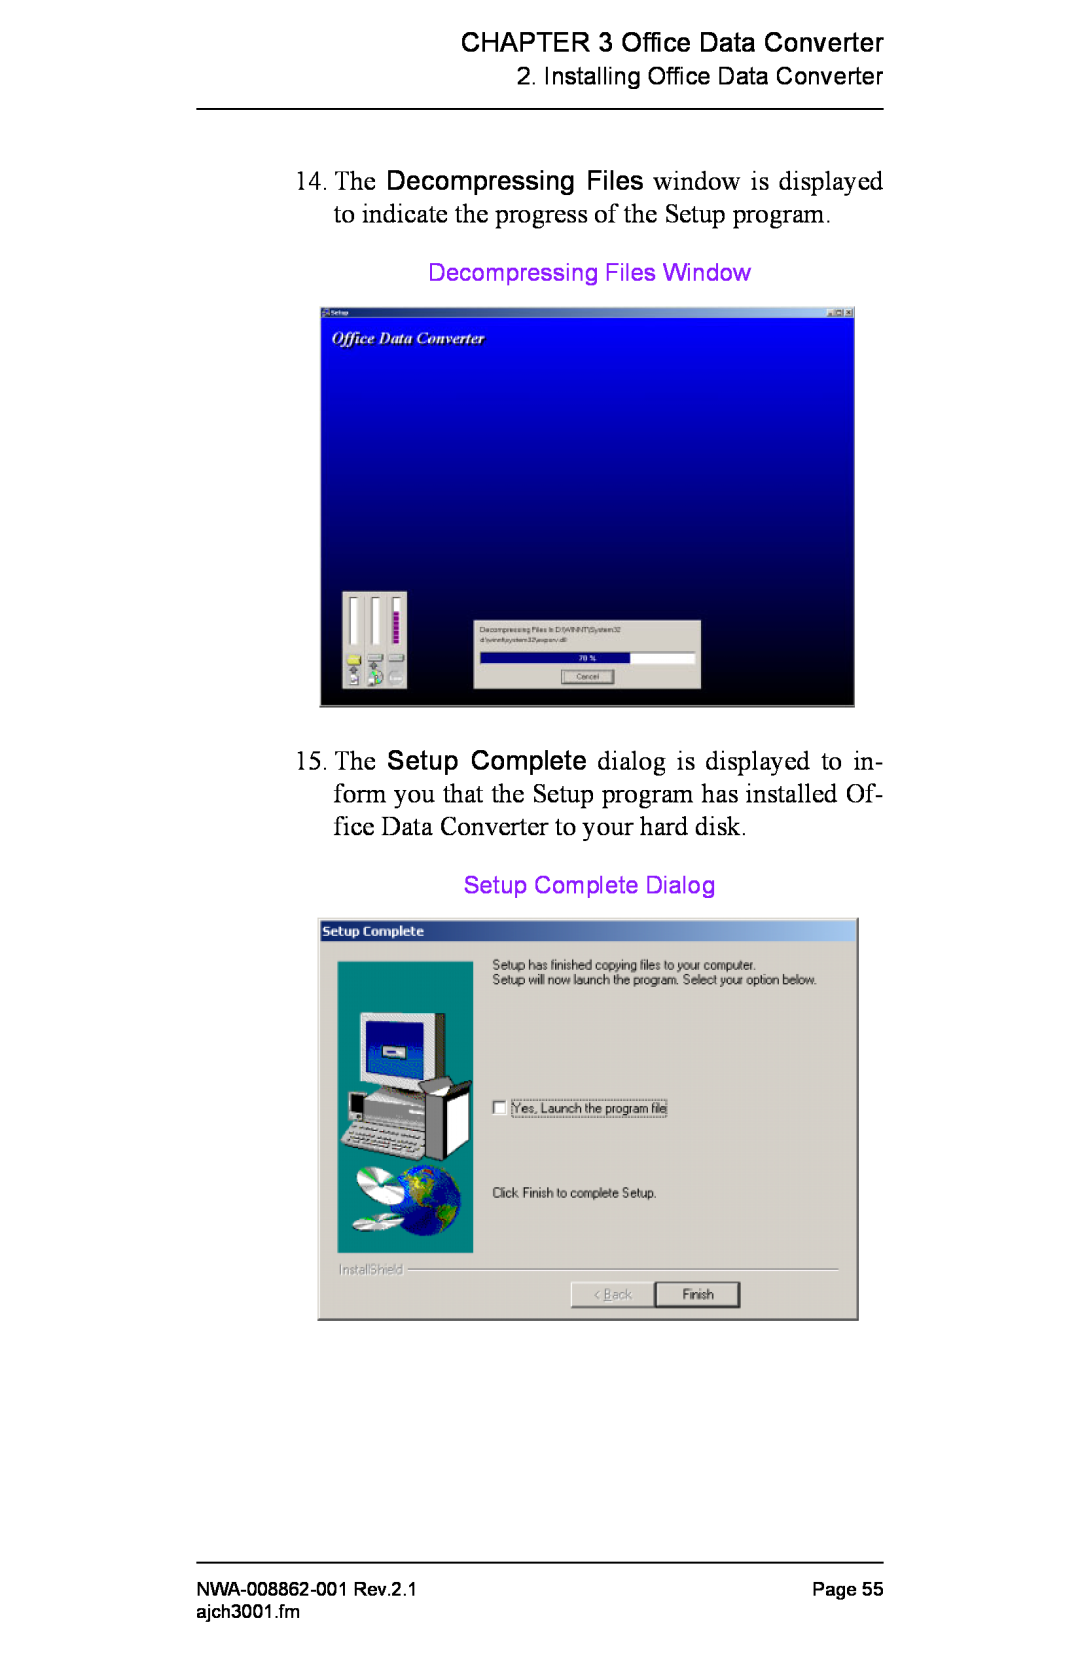 NEC NWA-008862-001 manual Decompressing Files Window, Setup Complete Dialog 